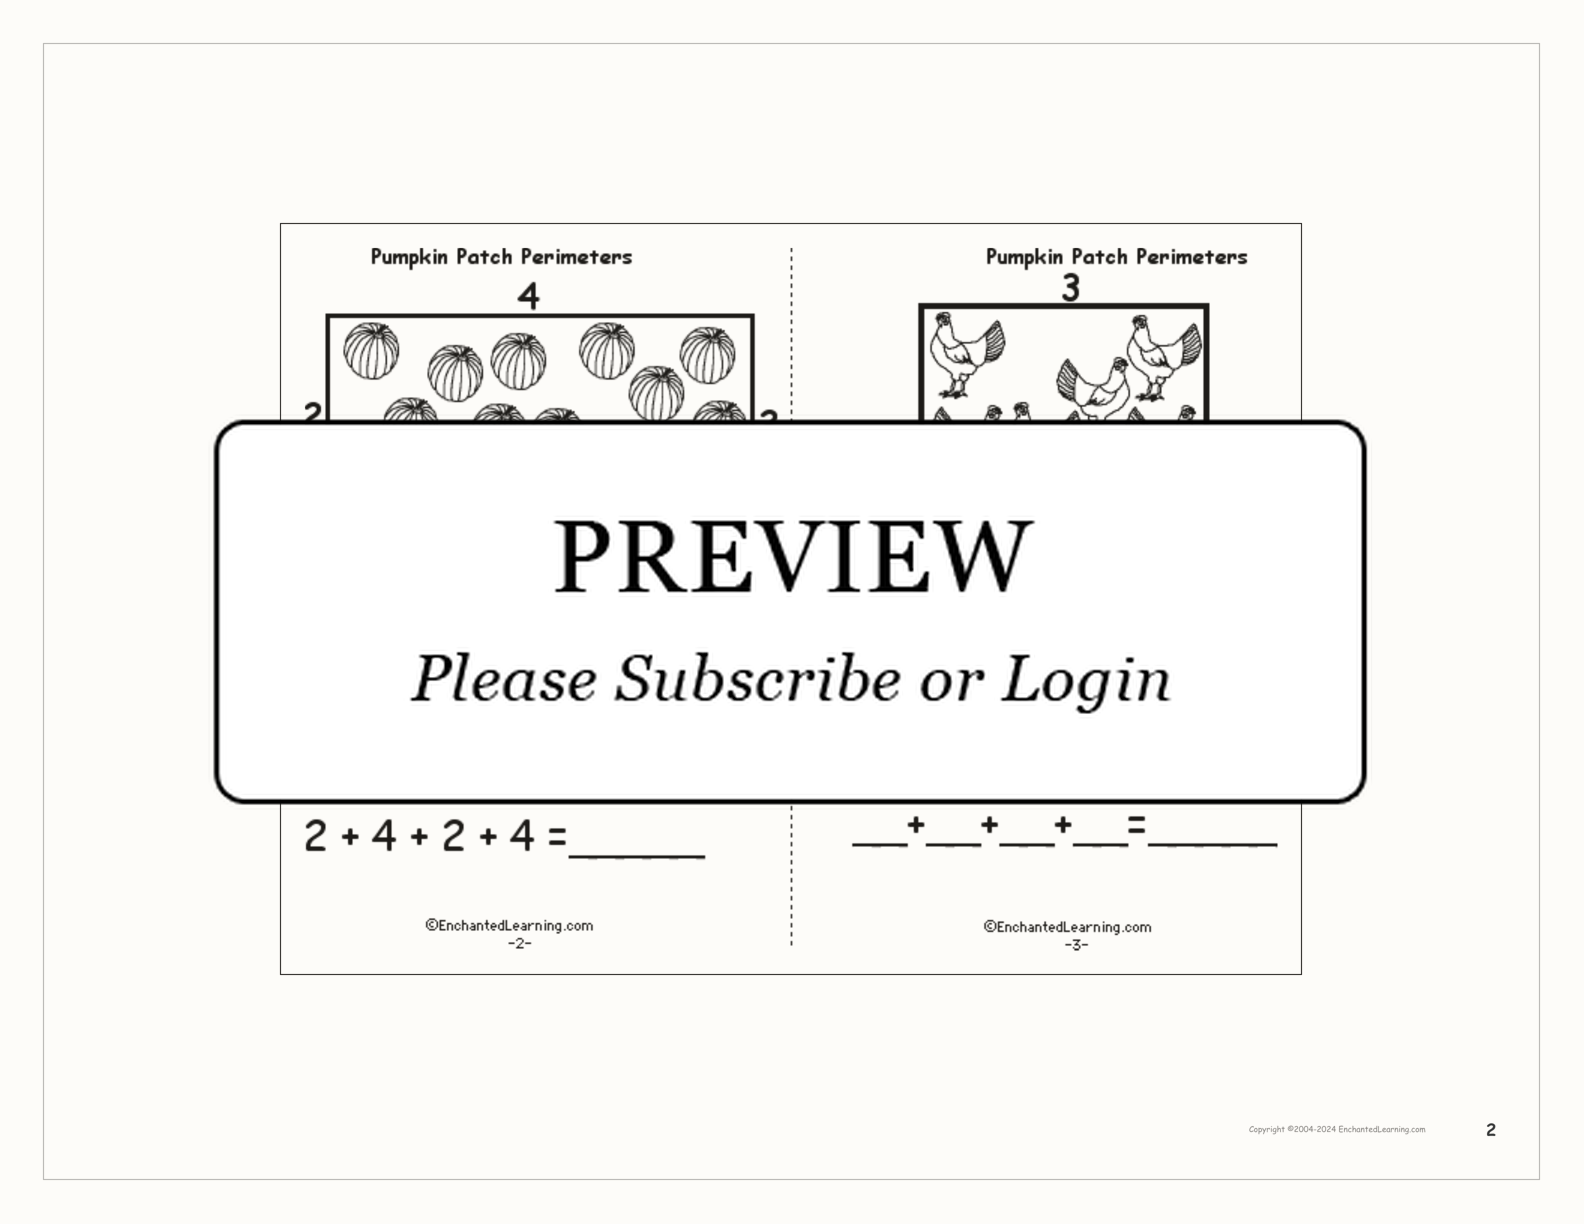 Pumpkin Patch Perimeters: A Printable Book interactive printout page 2